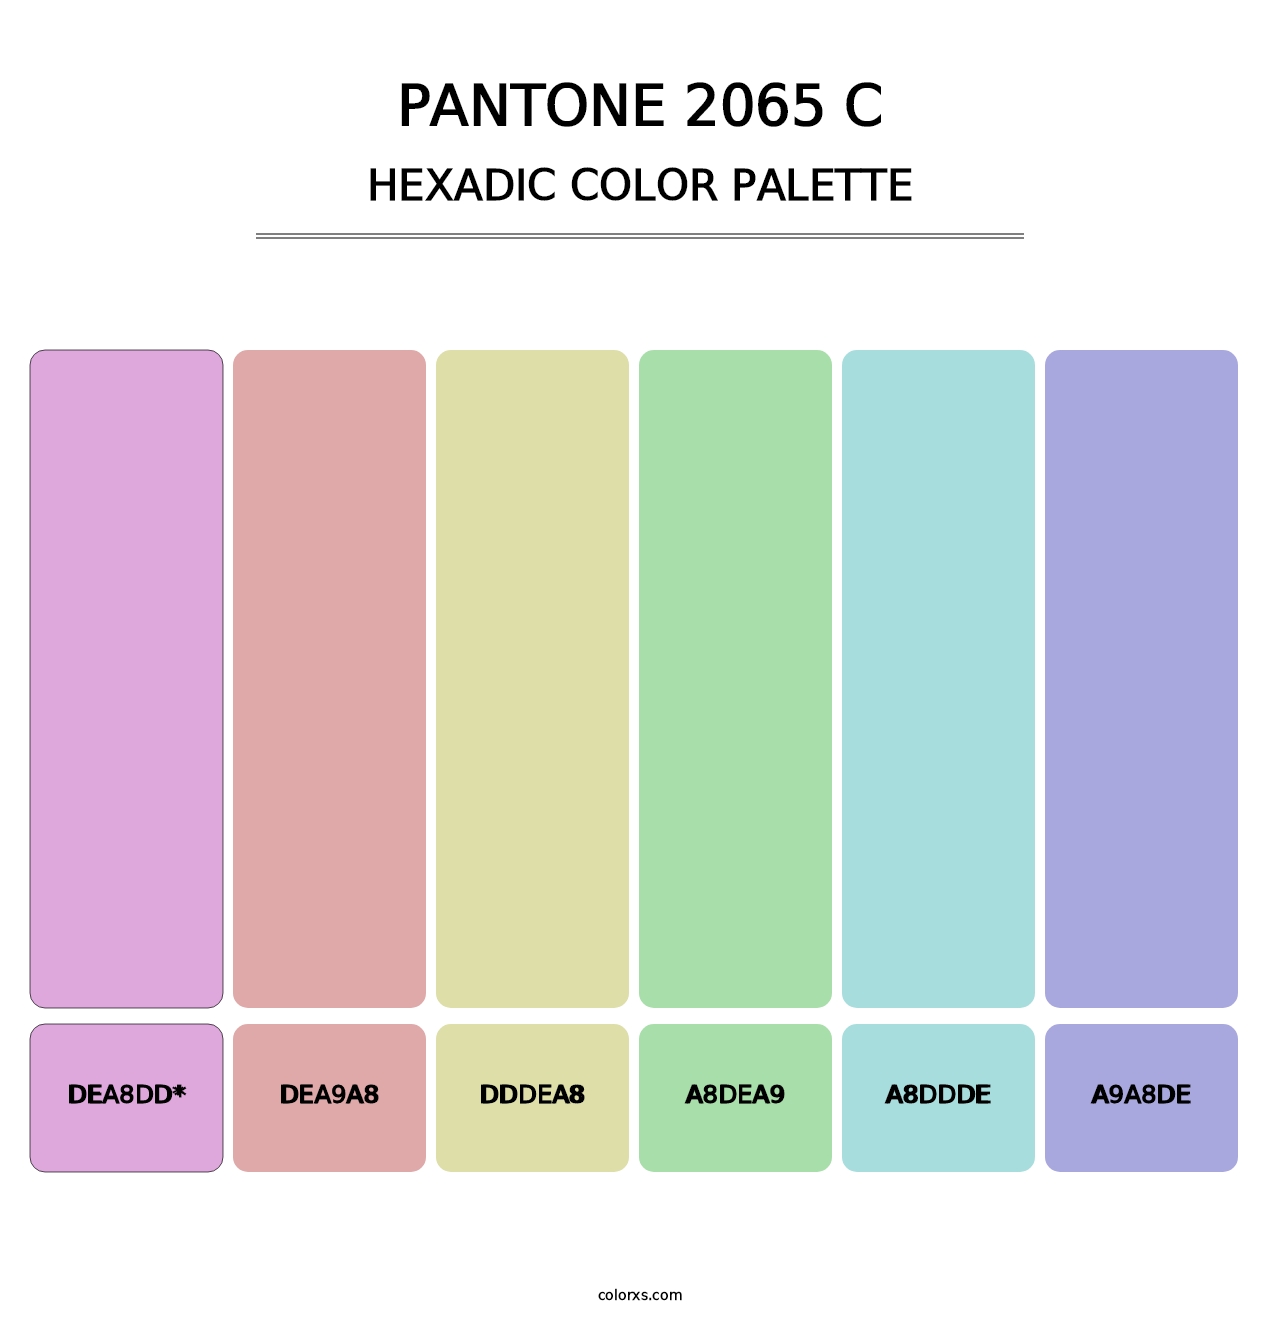 PANTONE 2065 C - Hexadic Color Palette